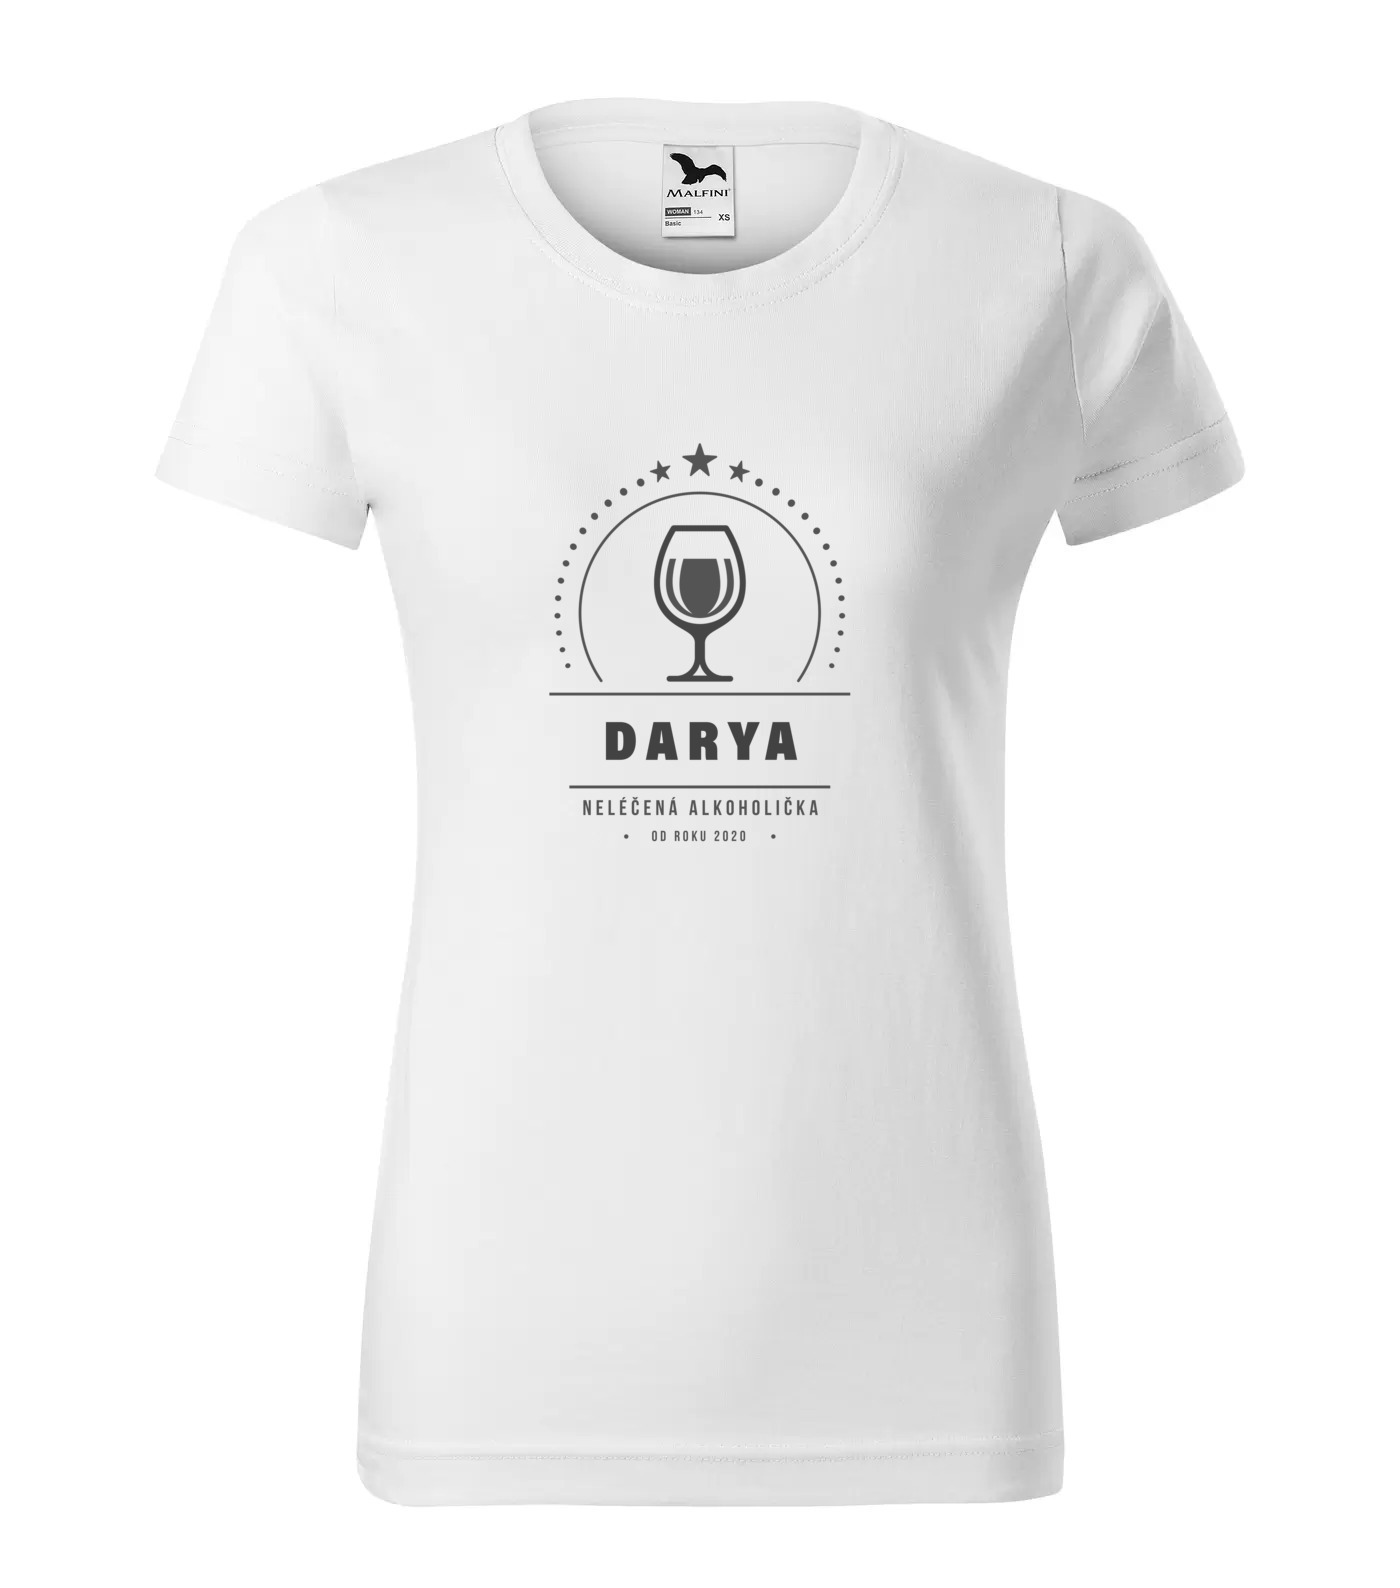 Tričko Alkoholička Darya